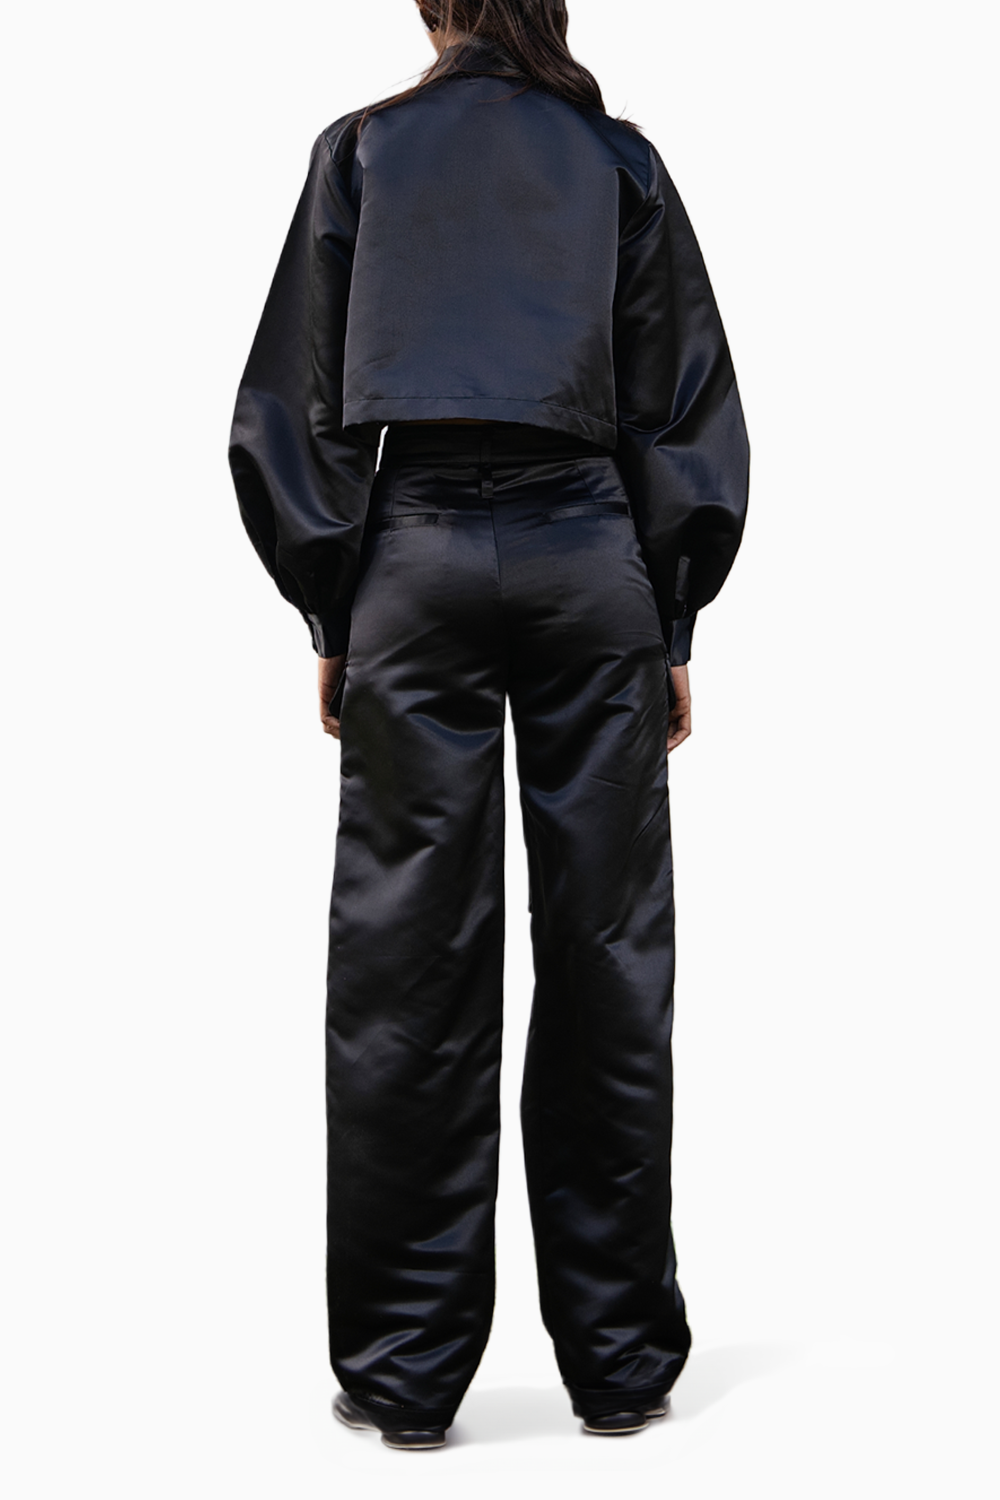 Cosmic Black Shirt with Pants Set